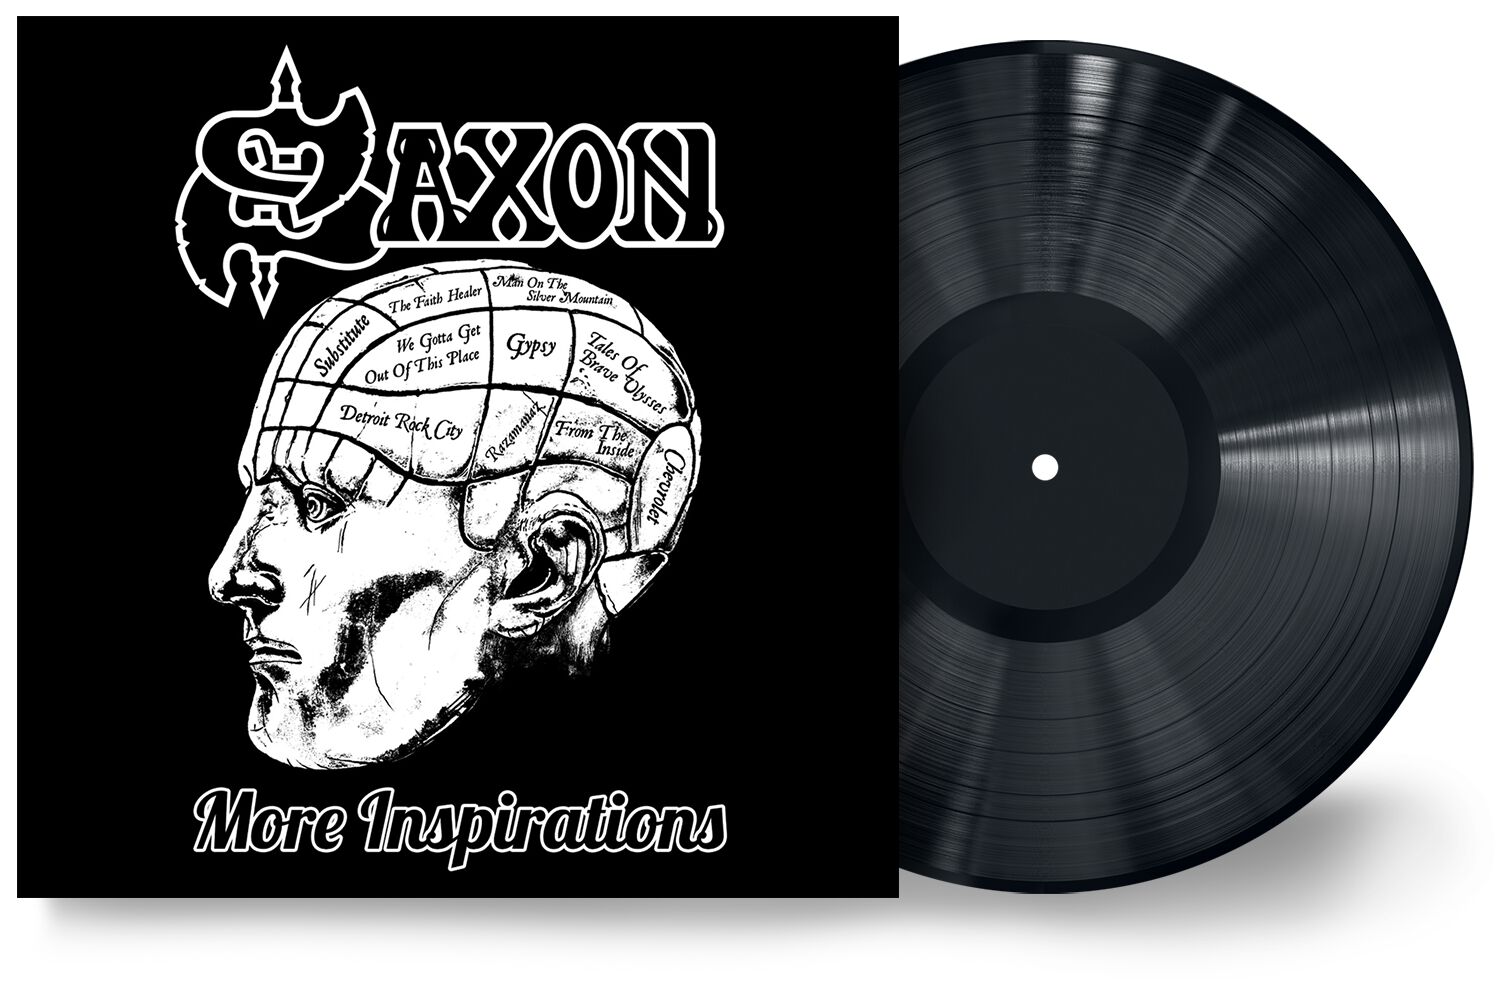 More inspirations LP von Saxon